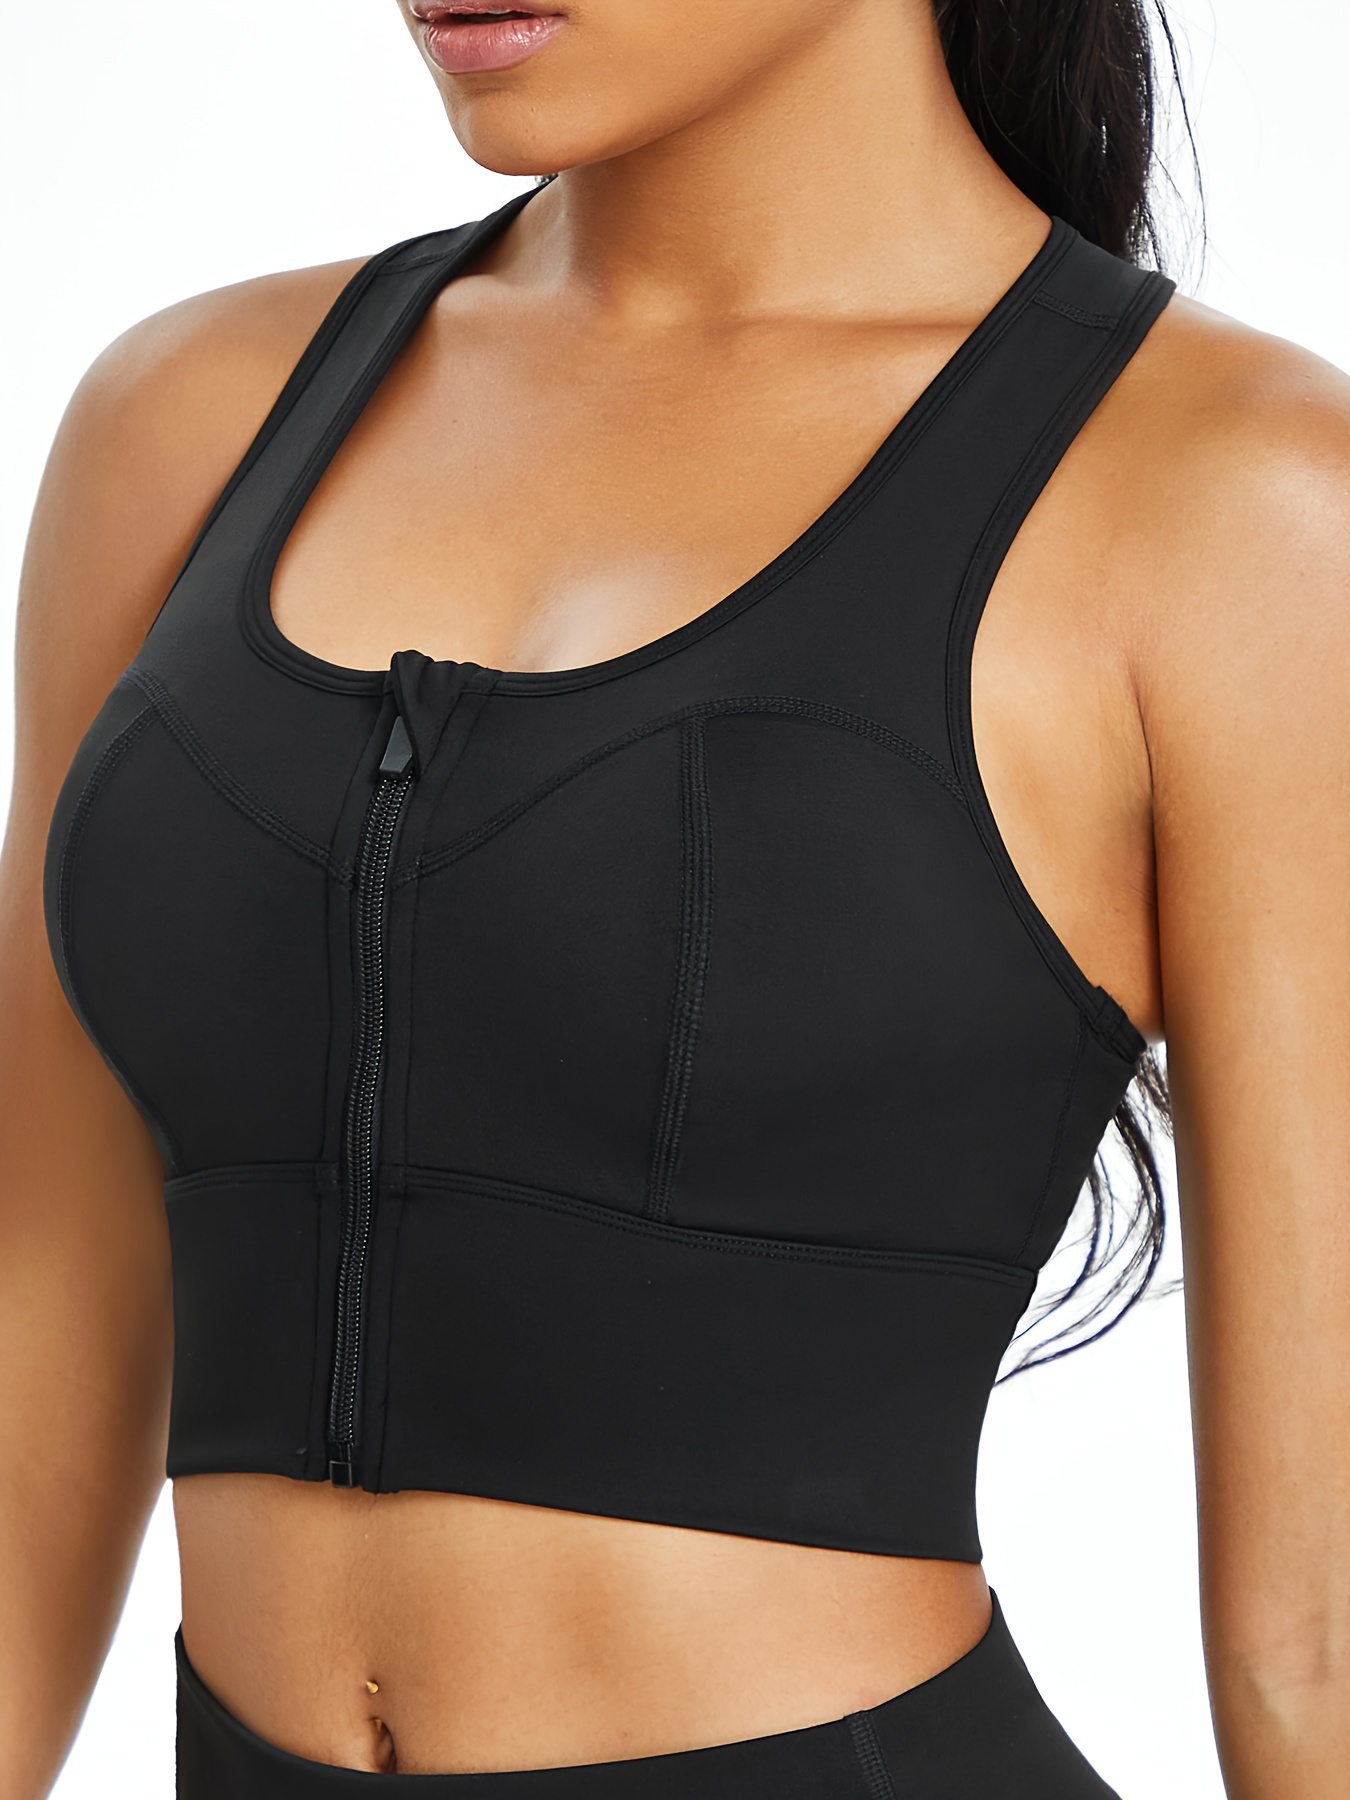 Sports bra Front Zipper Closure bra Shockproof Sports Bra for